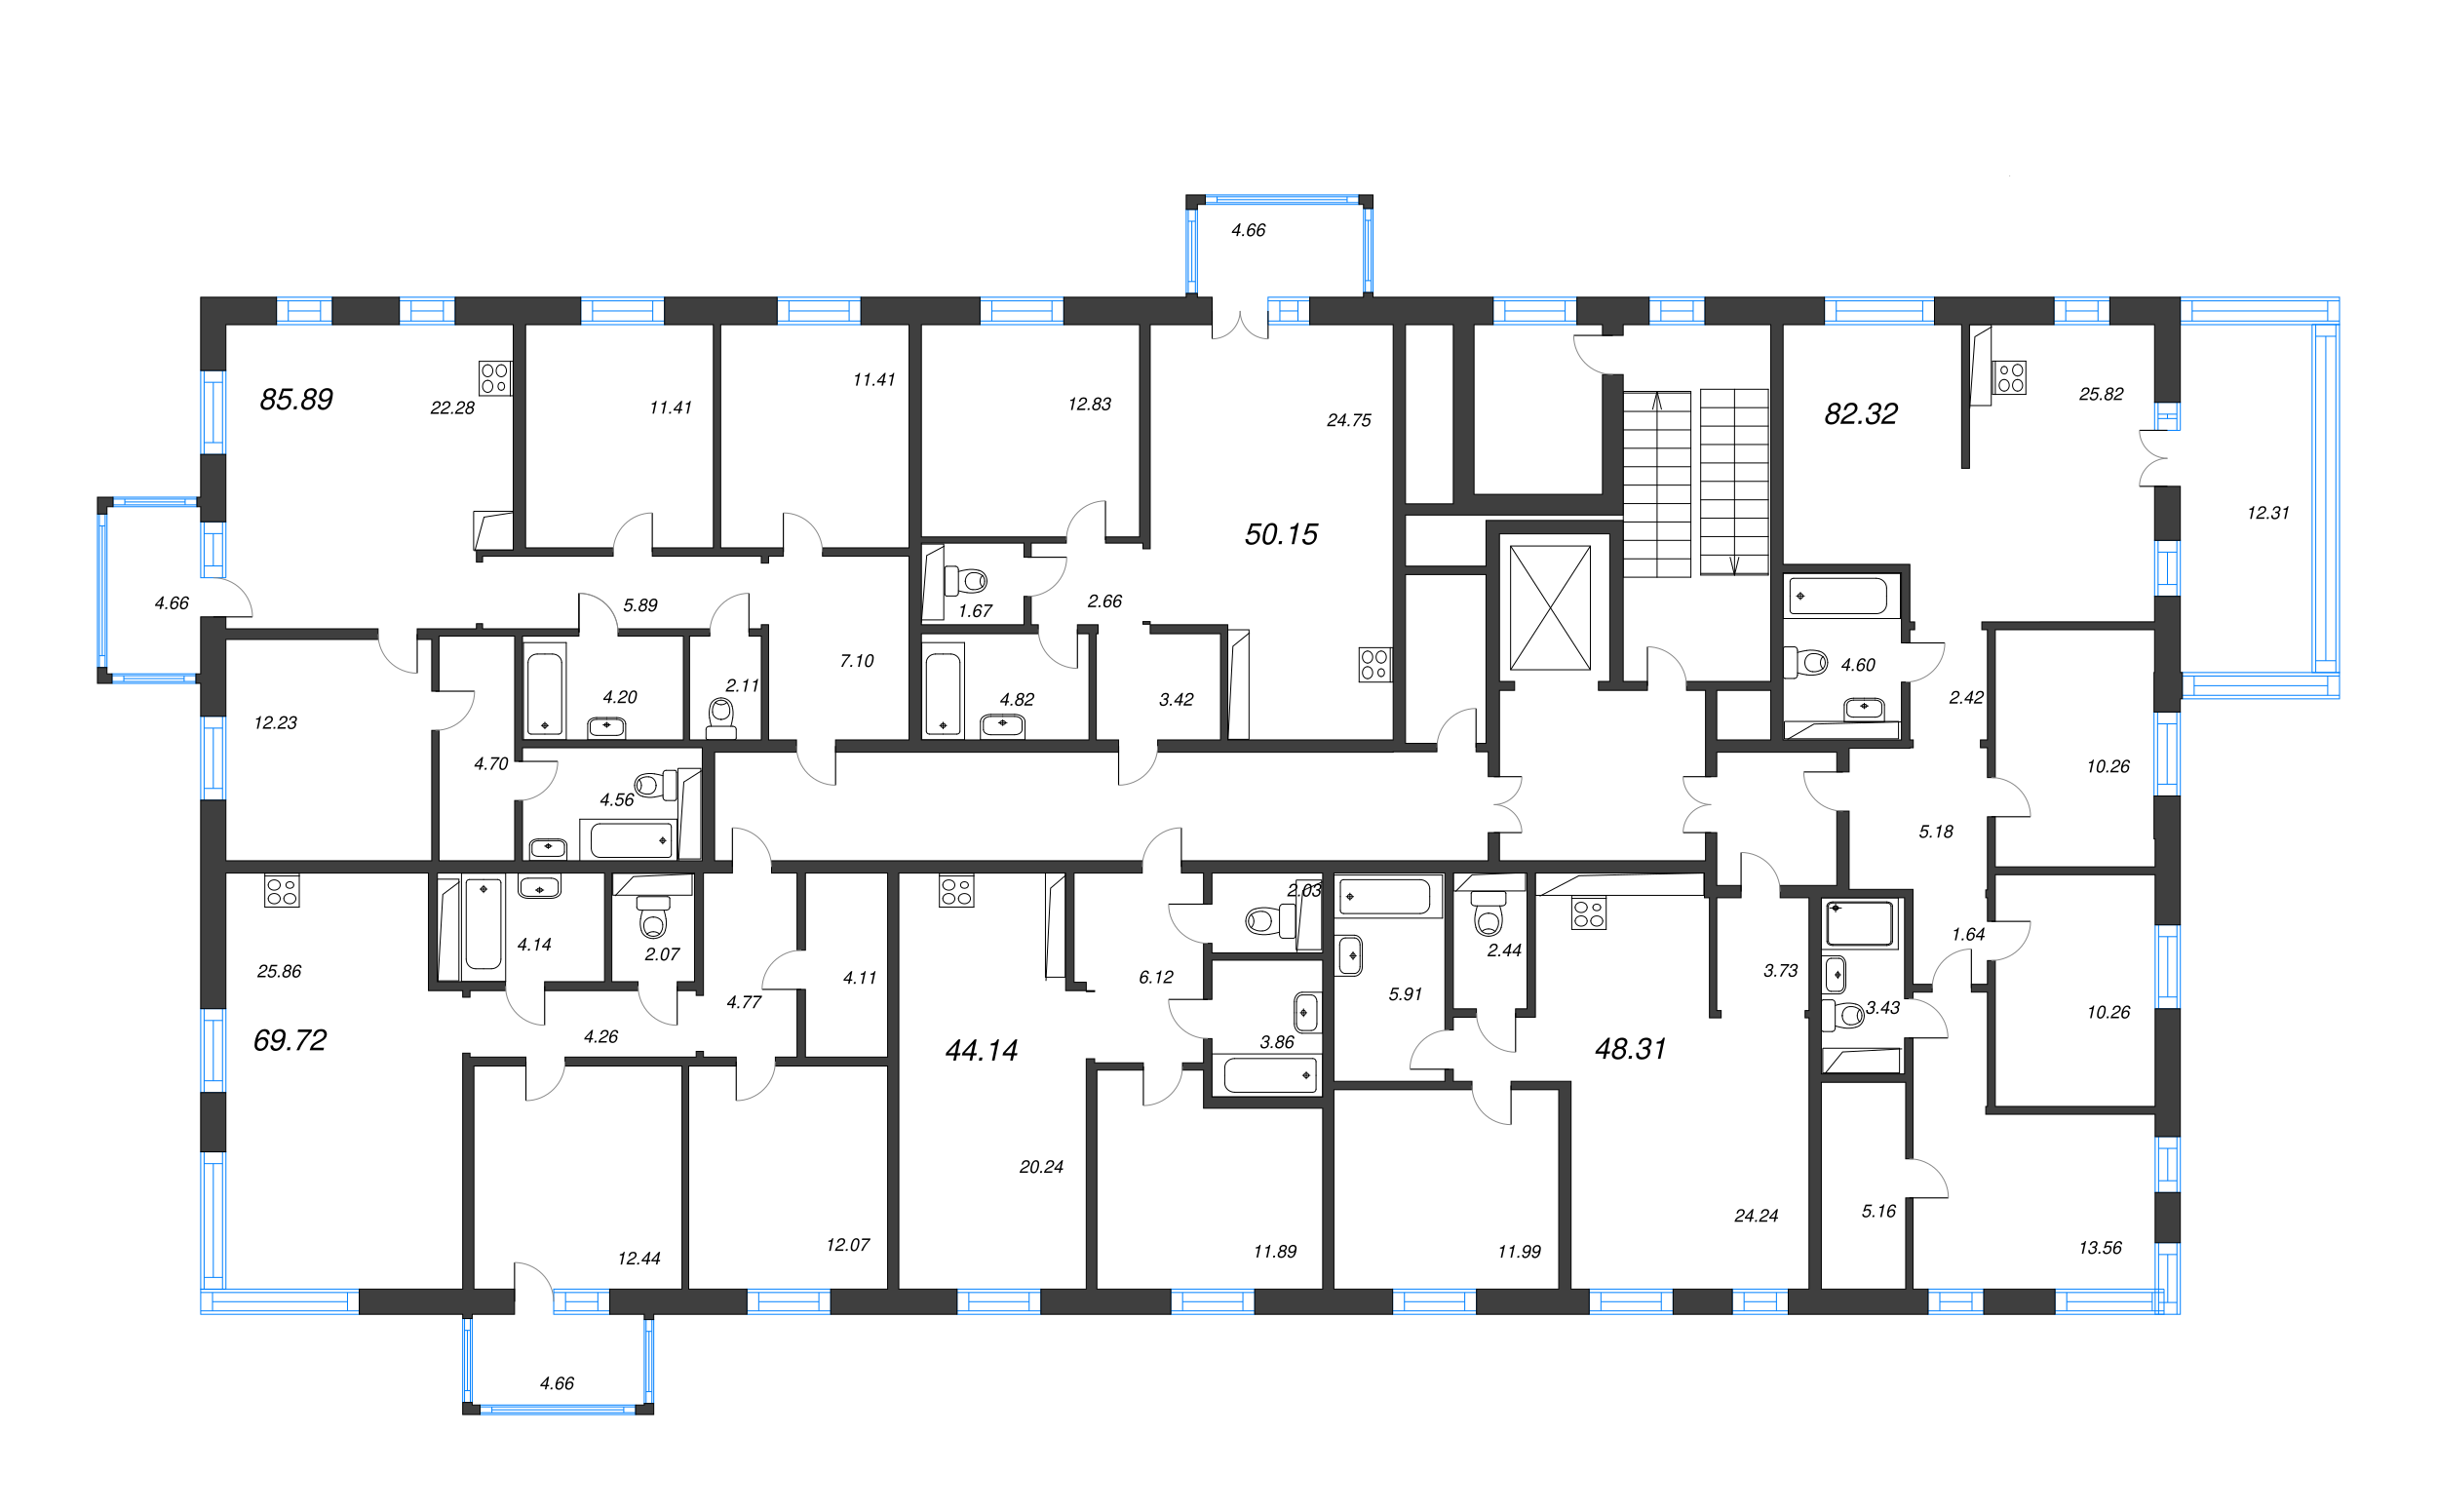 4-комнатная (Евро) квартира, 82.32 м² - планировка этажа